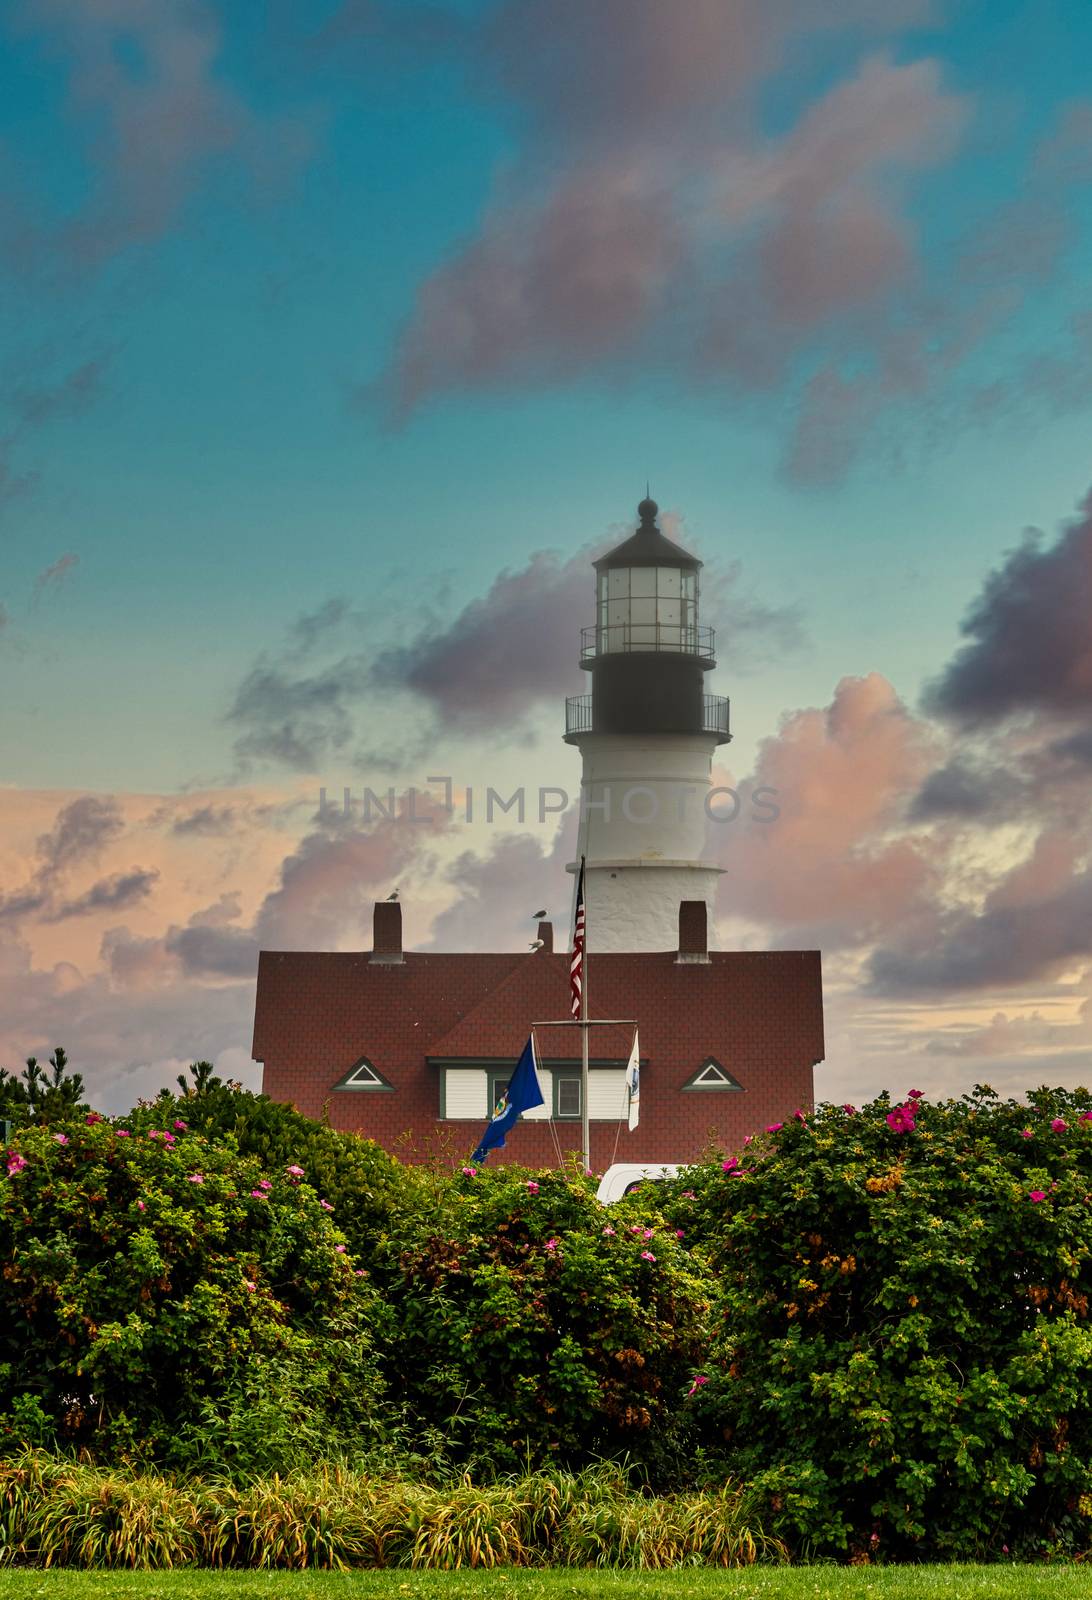 Porland Head Lighthouse Beyond Shrubs at Dusk by dbvirago